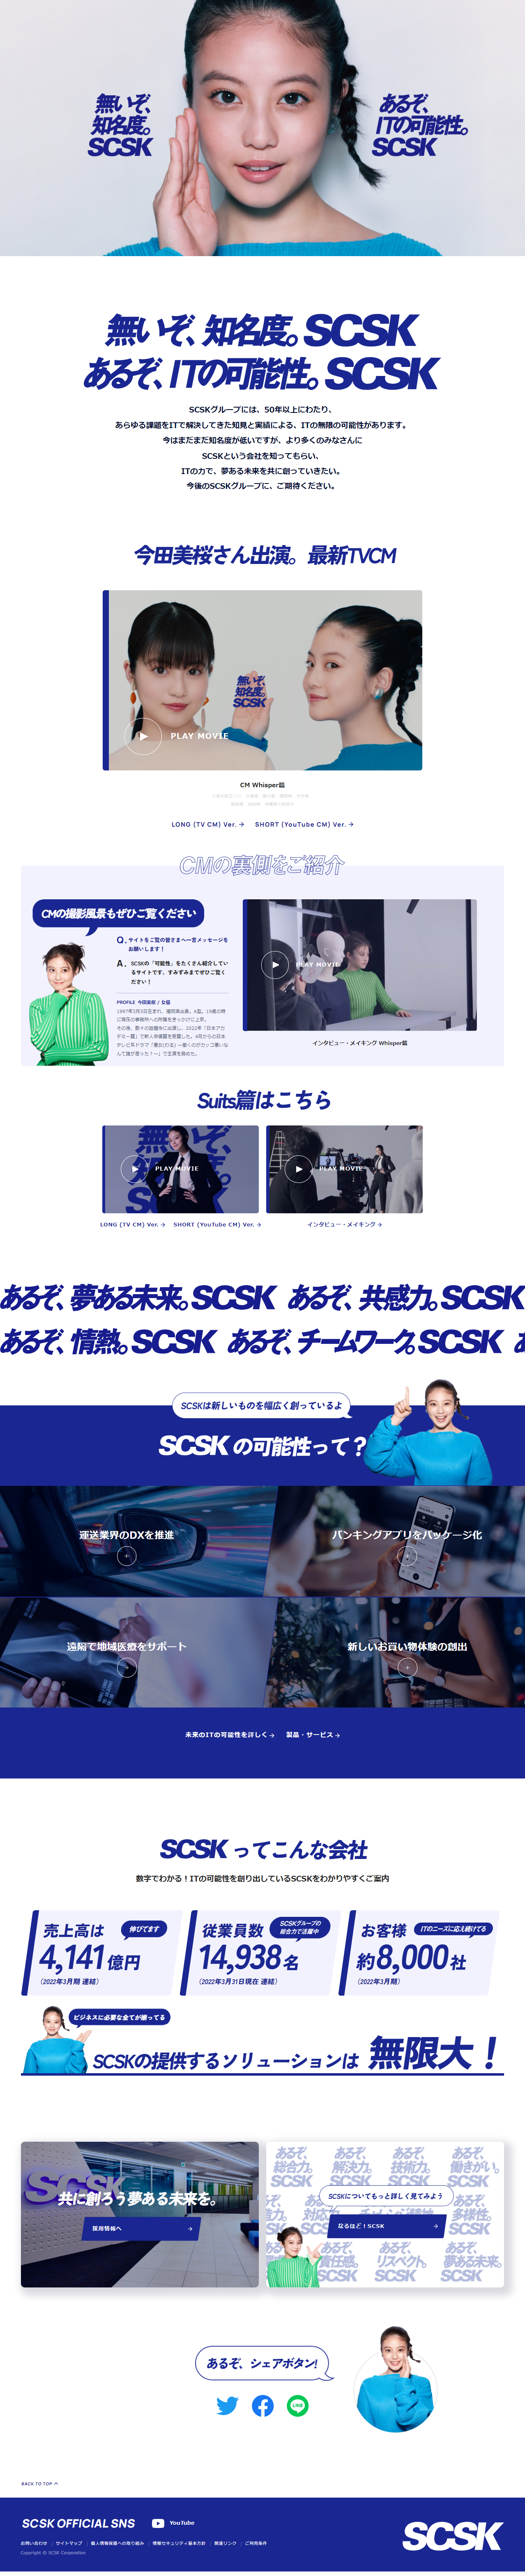 SCSK株式会社_pc_1